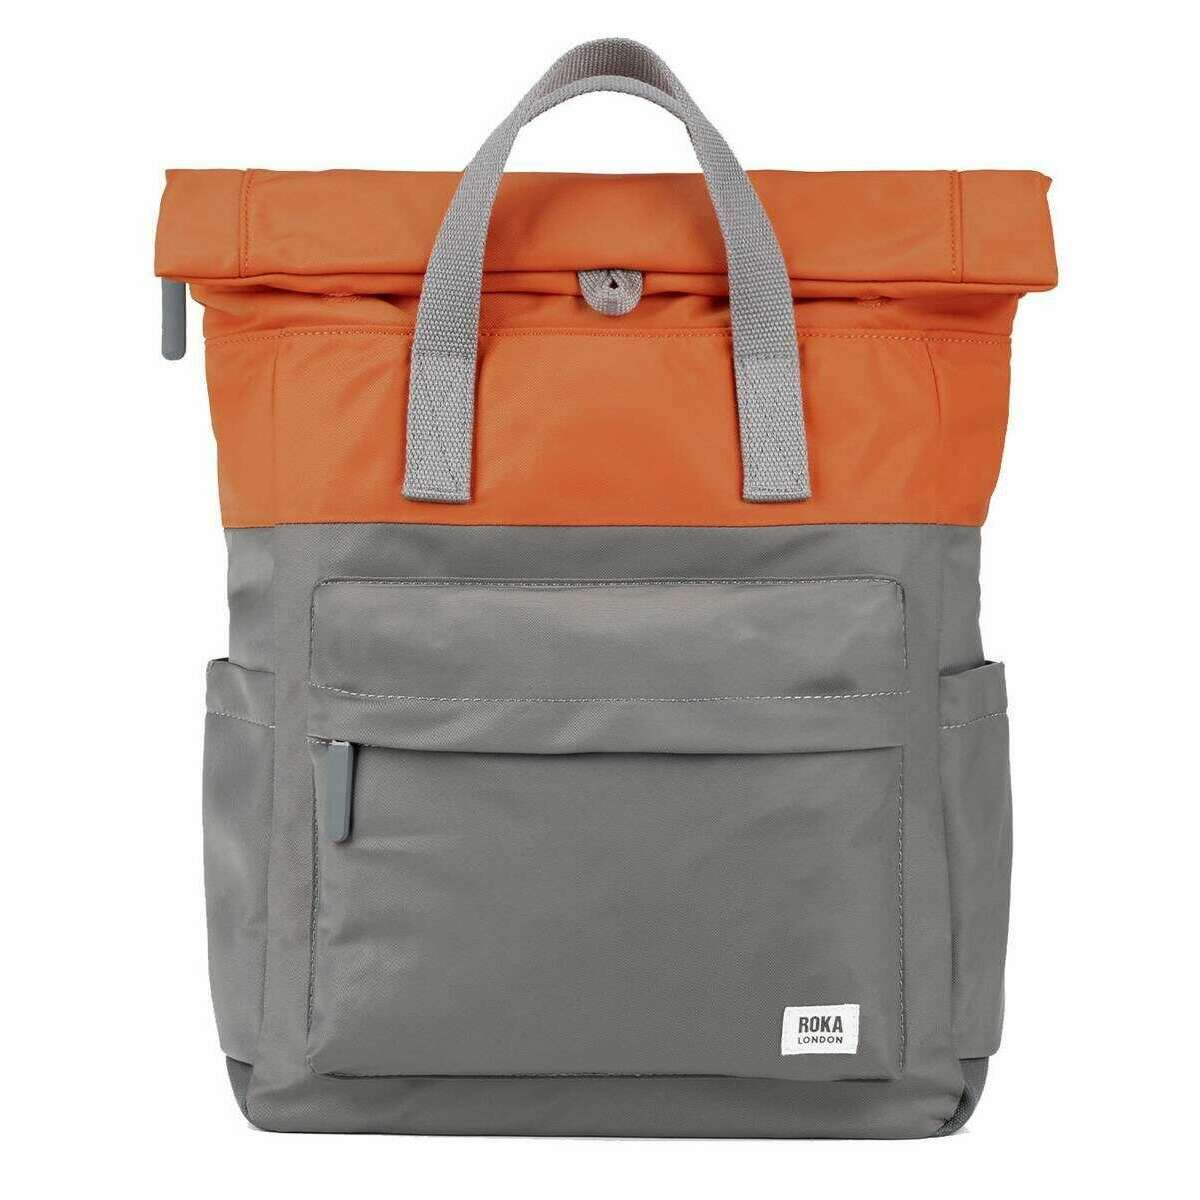 Roka Canfield B Medium Creative Waste Two Tone Recycled Nylon Backpack - Graphite Grey/Burnt Orange